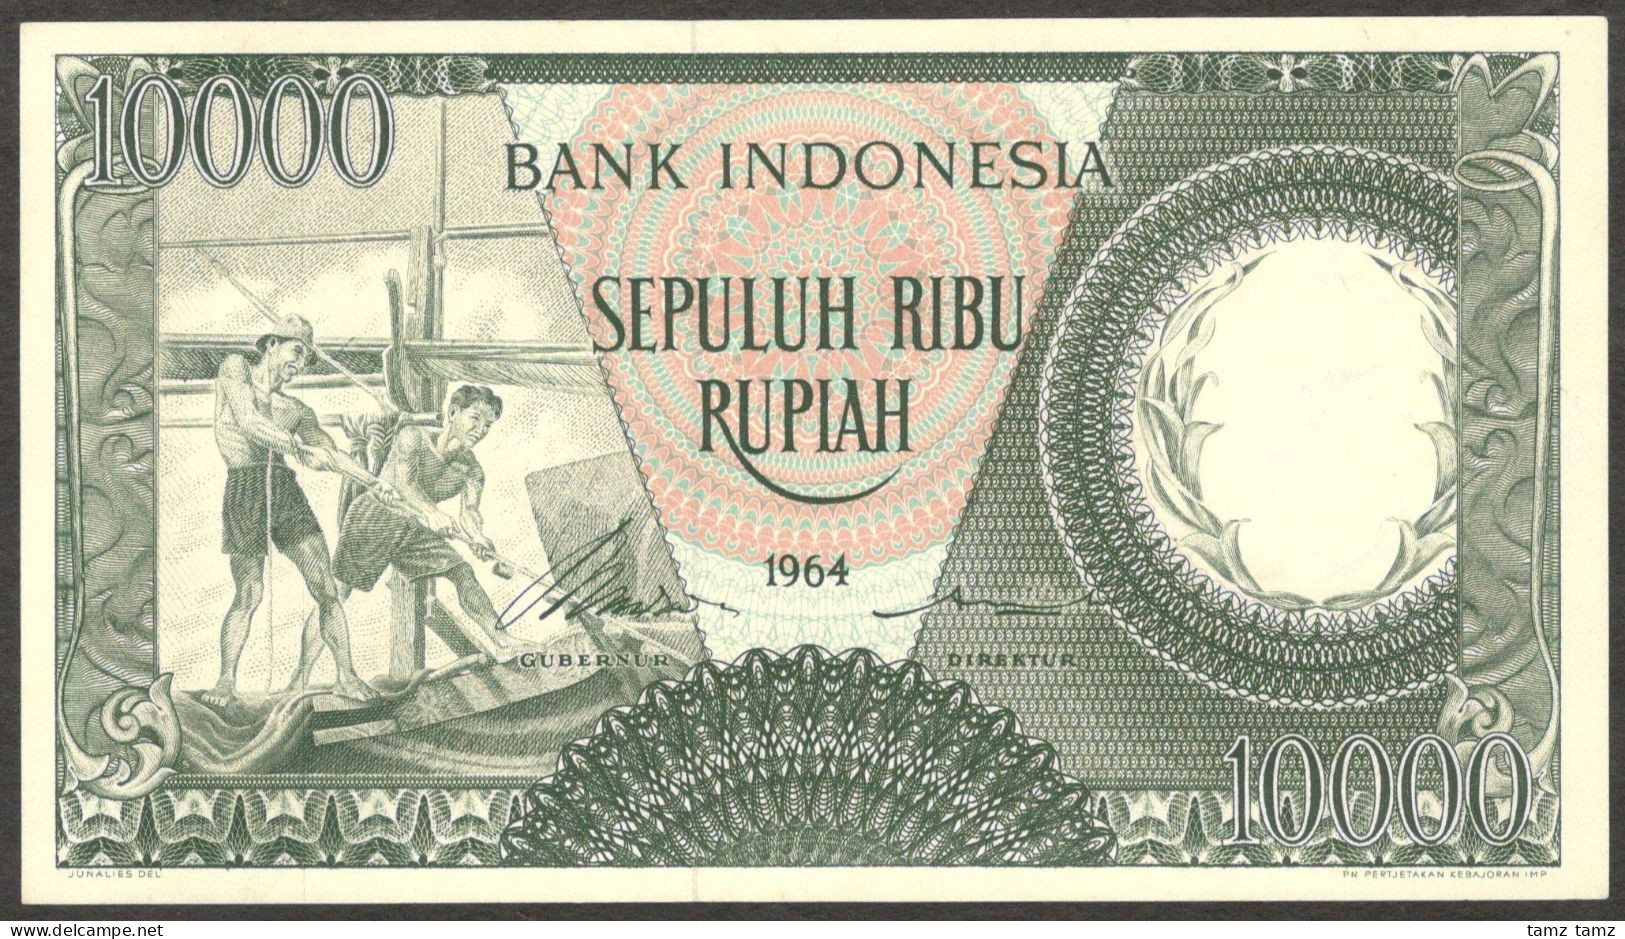 Indonesia 10000 10,000 Rupiah Green Fisherman P-100 1964 UNC - Indonesia